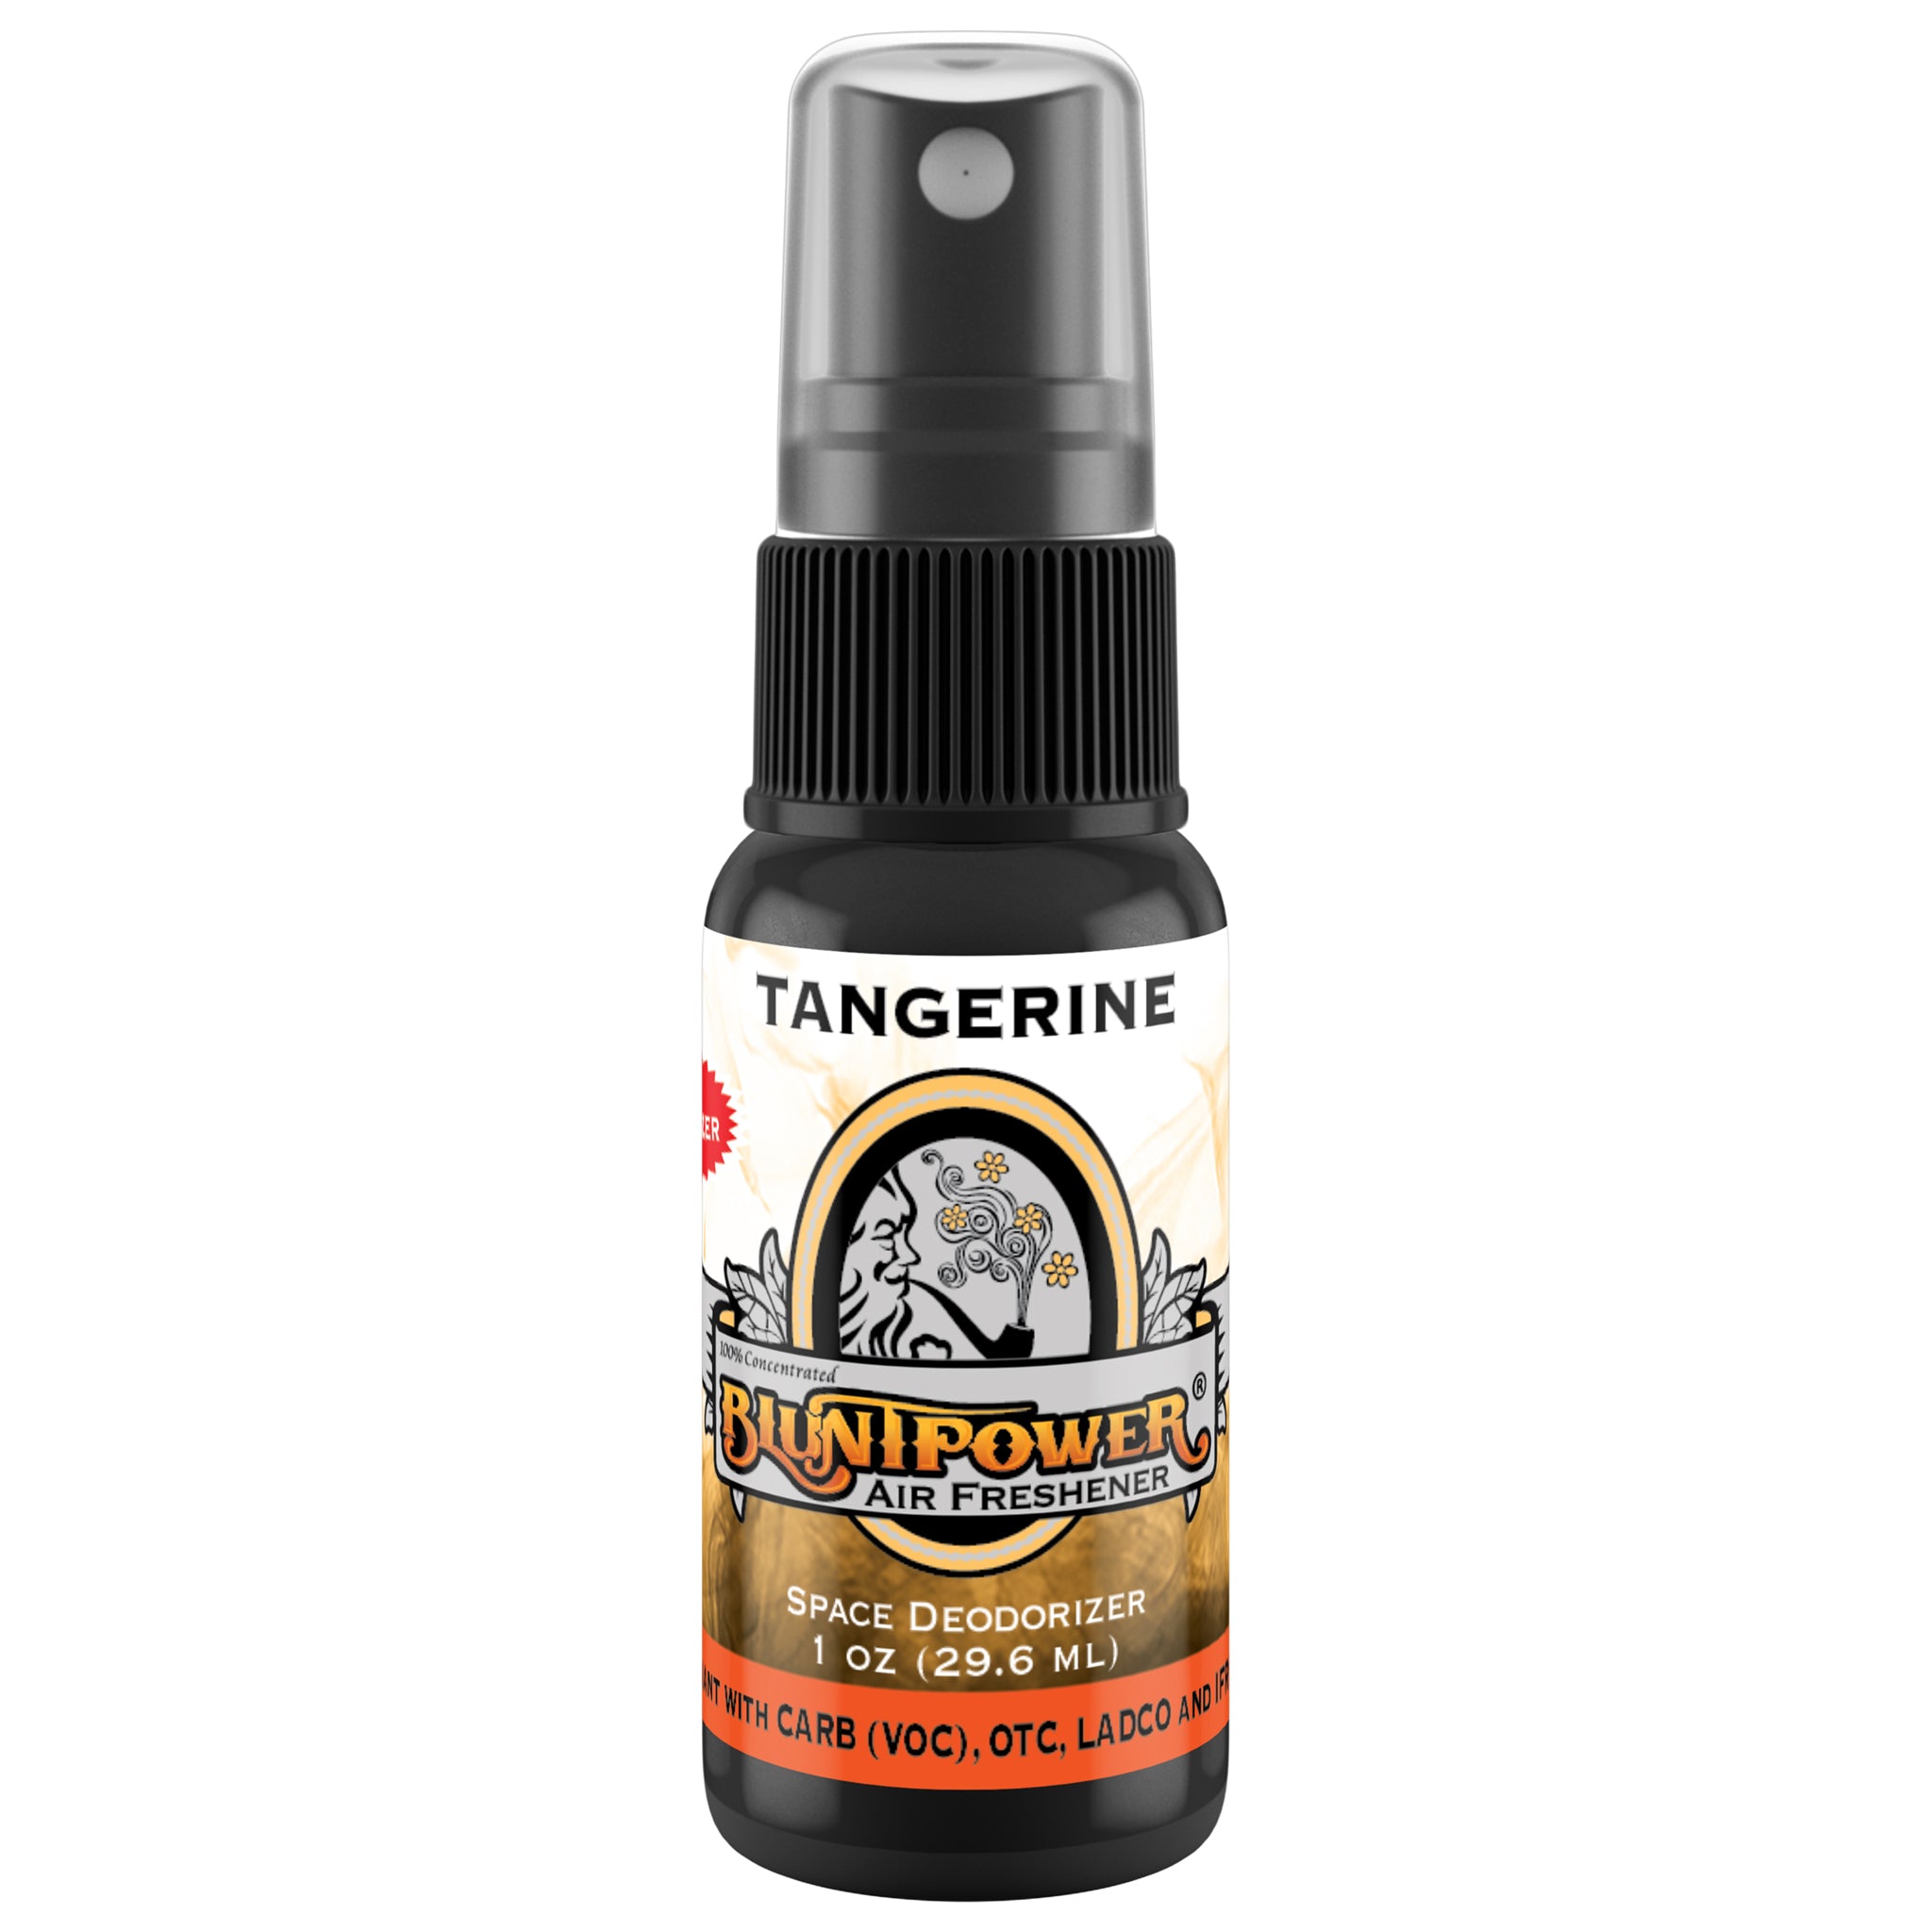 NEW BluntPower Mini Air Fresheners (1 FL OZ) Fragrance: Tangerine